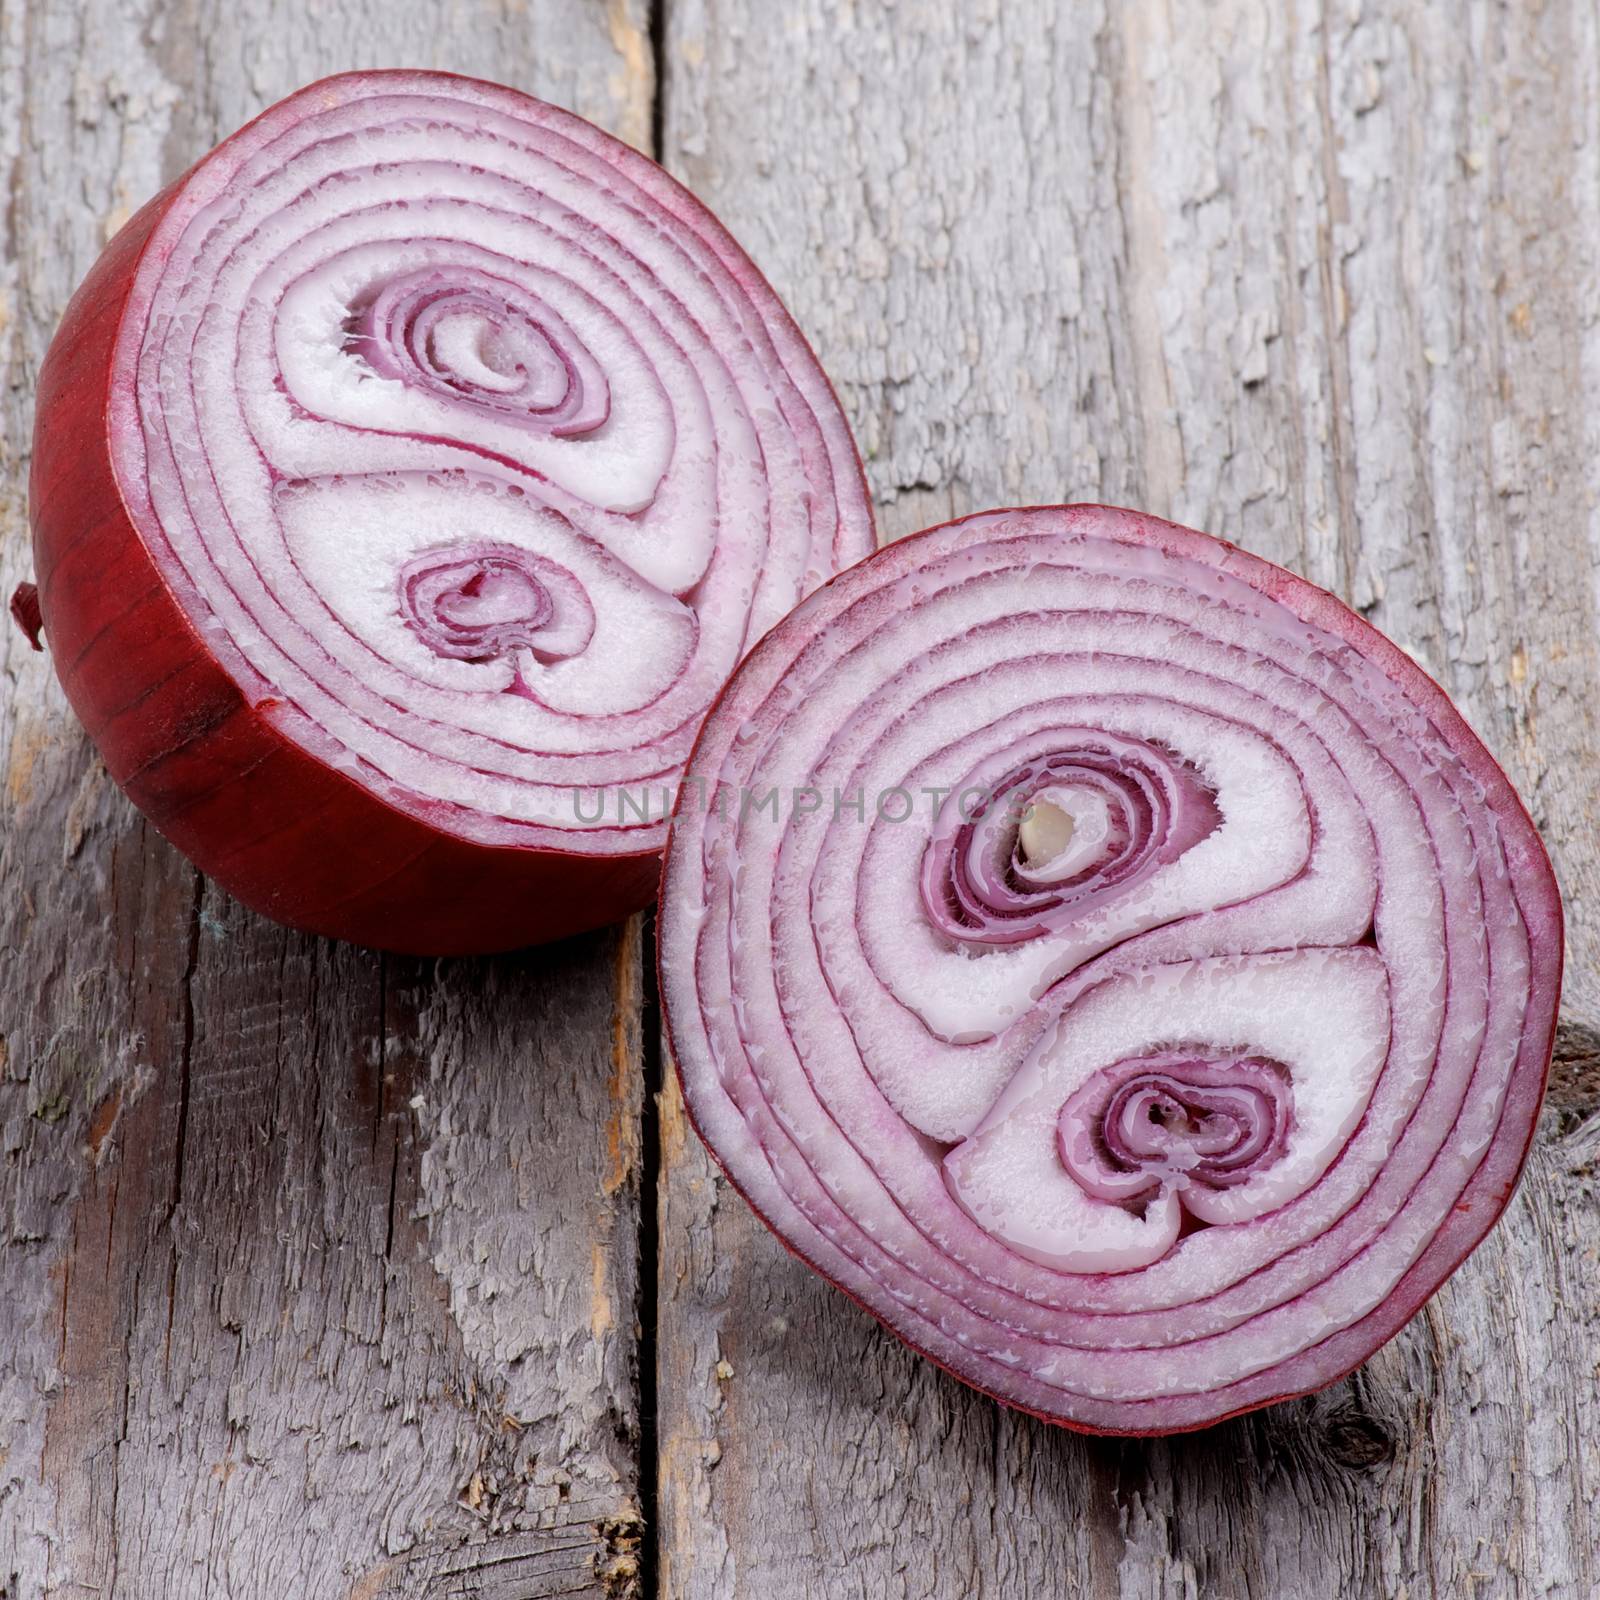 Red Onion by zhekos